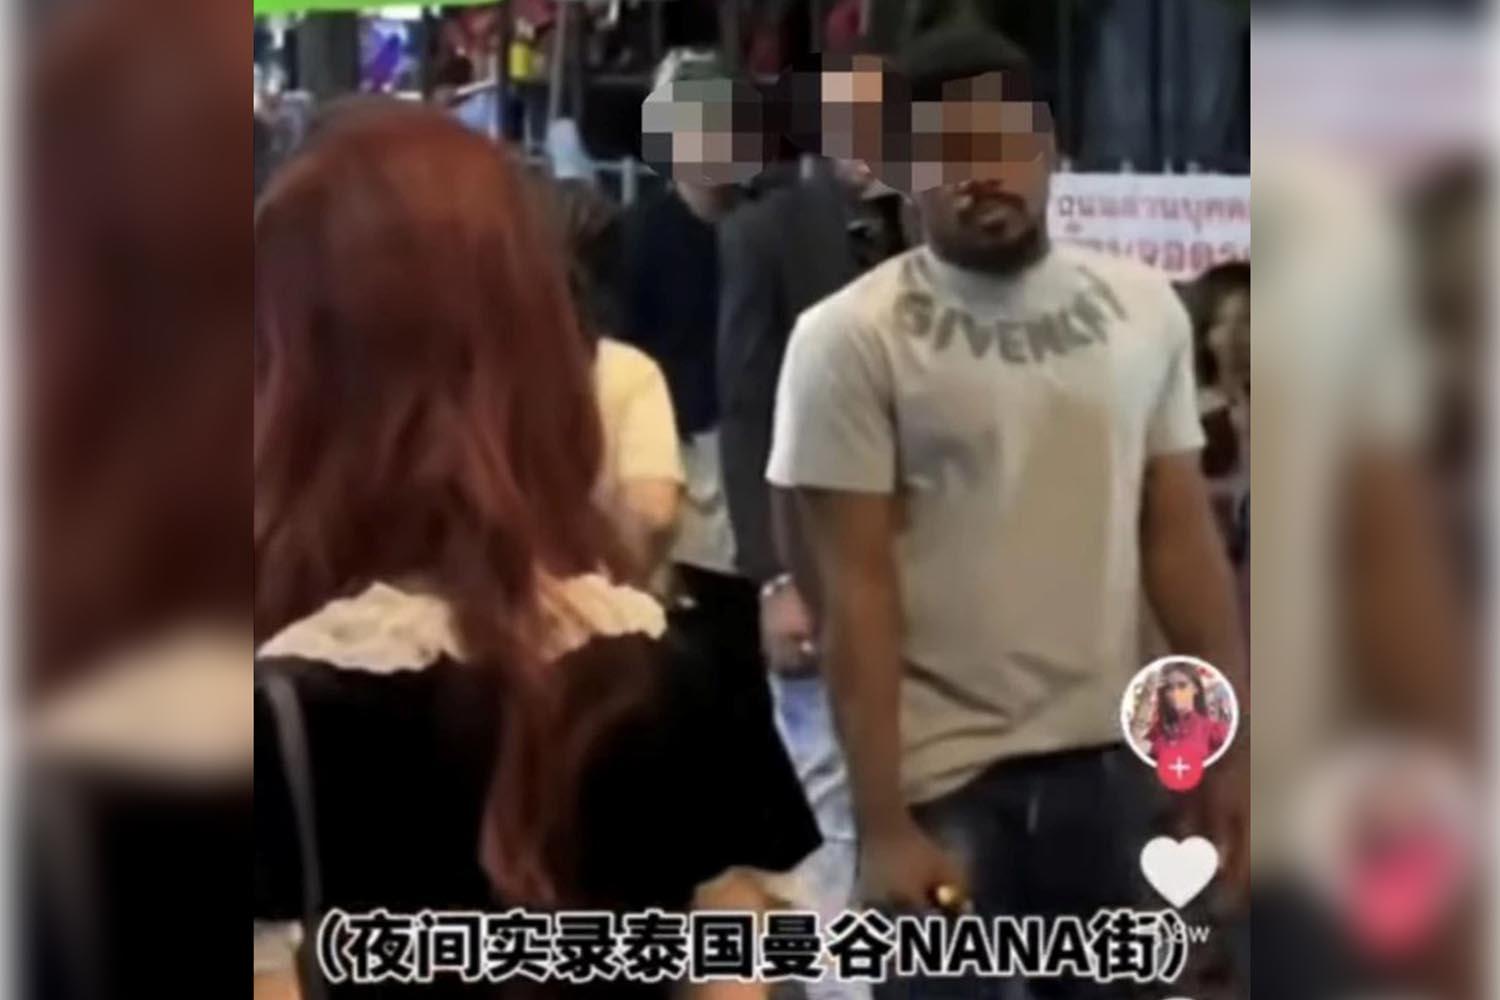 chinese-girl-live-content-viral-online-seller-suspect-arrested-SPACEBAR-Hero.jpg